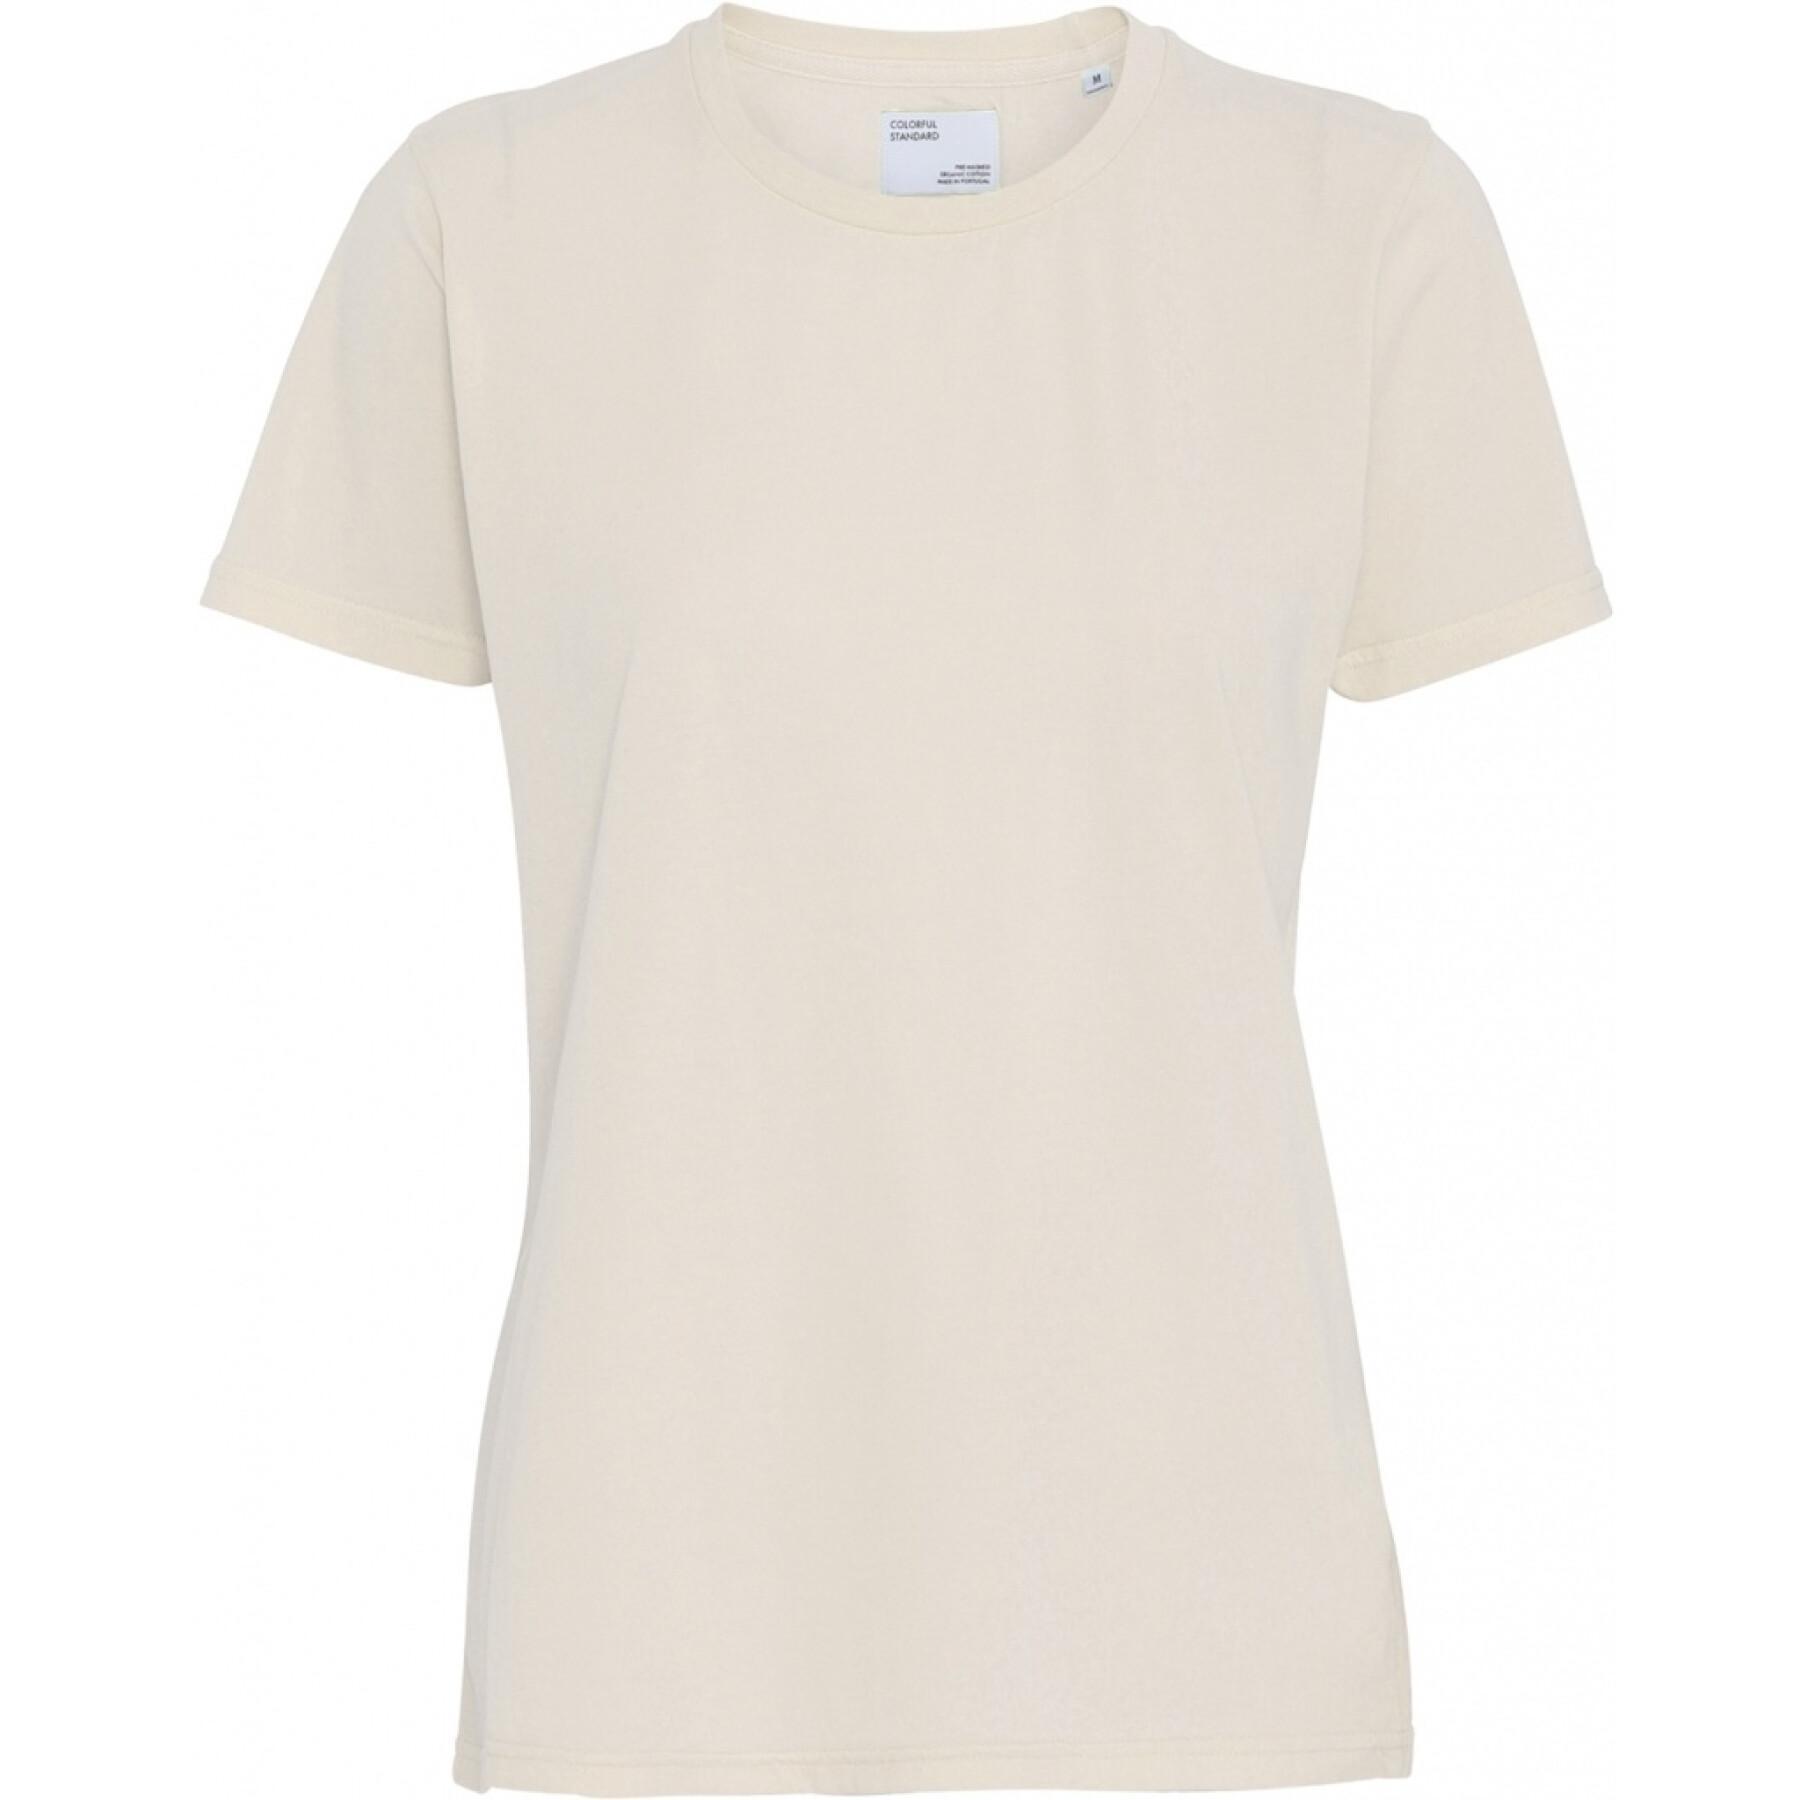 Women's T-shirt Colorful Standard Light Organic ivory white